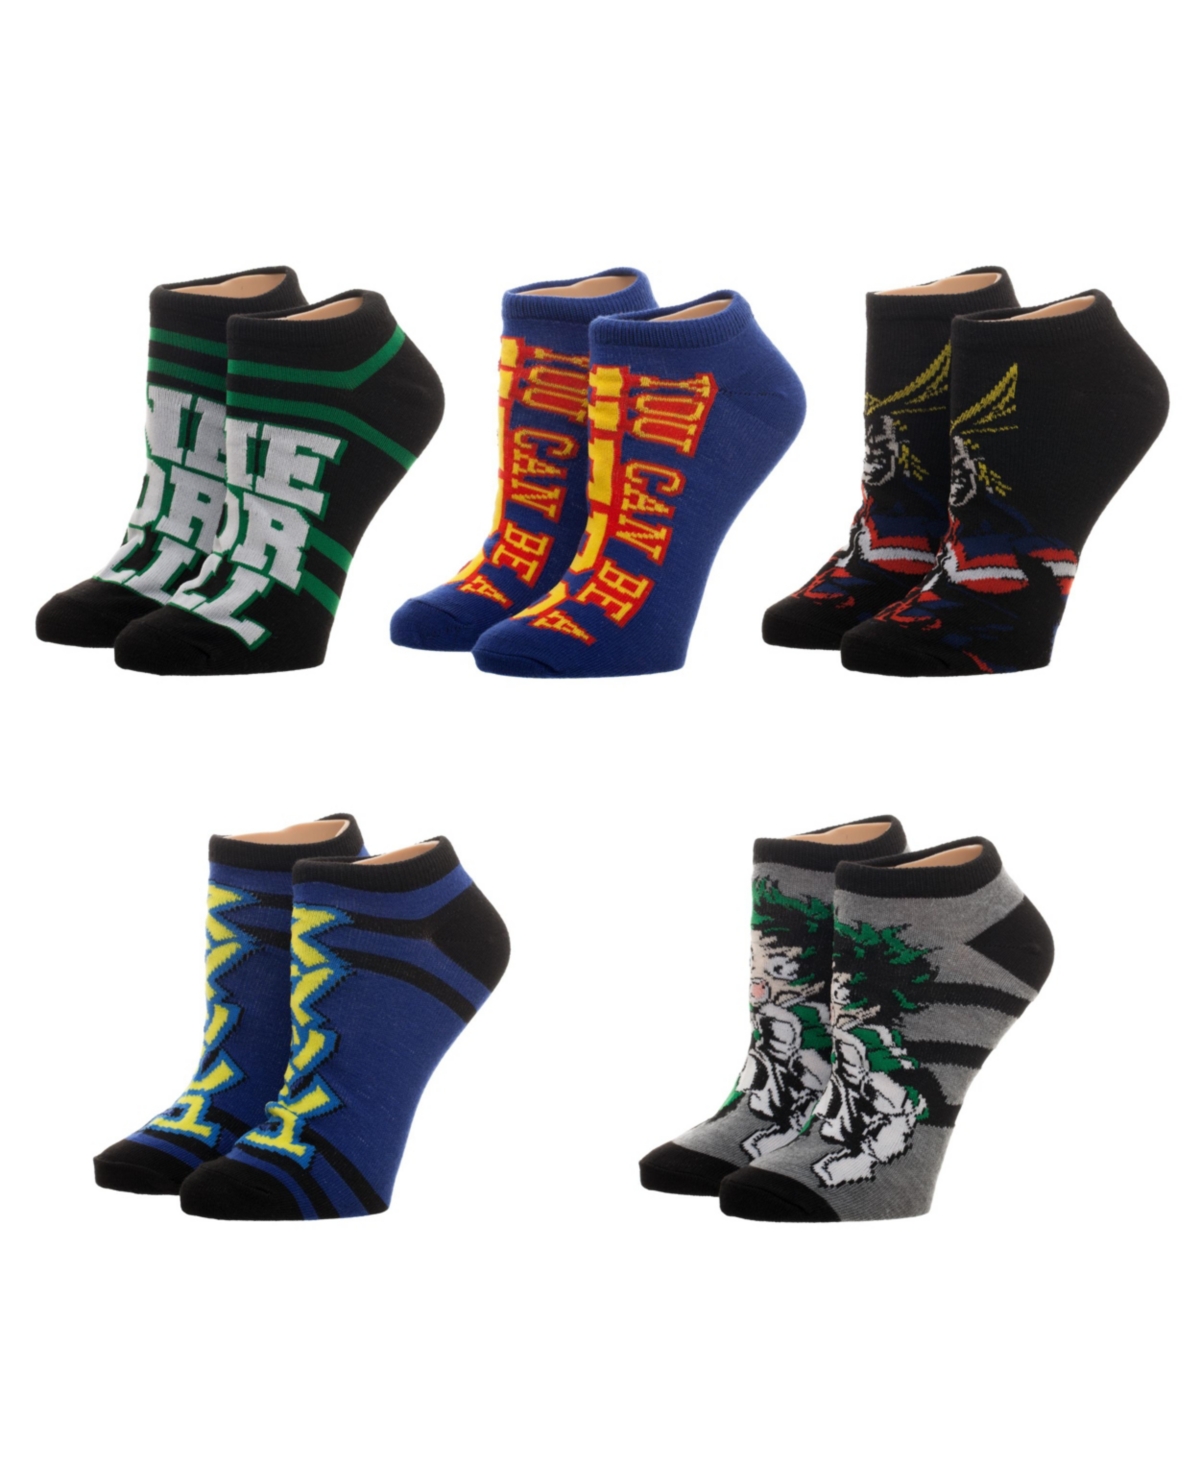 Men's Casual Ankle Socks for Men 5-Pack - Multicolored